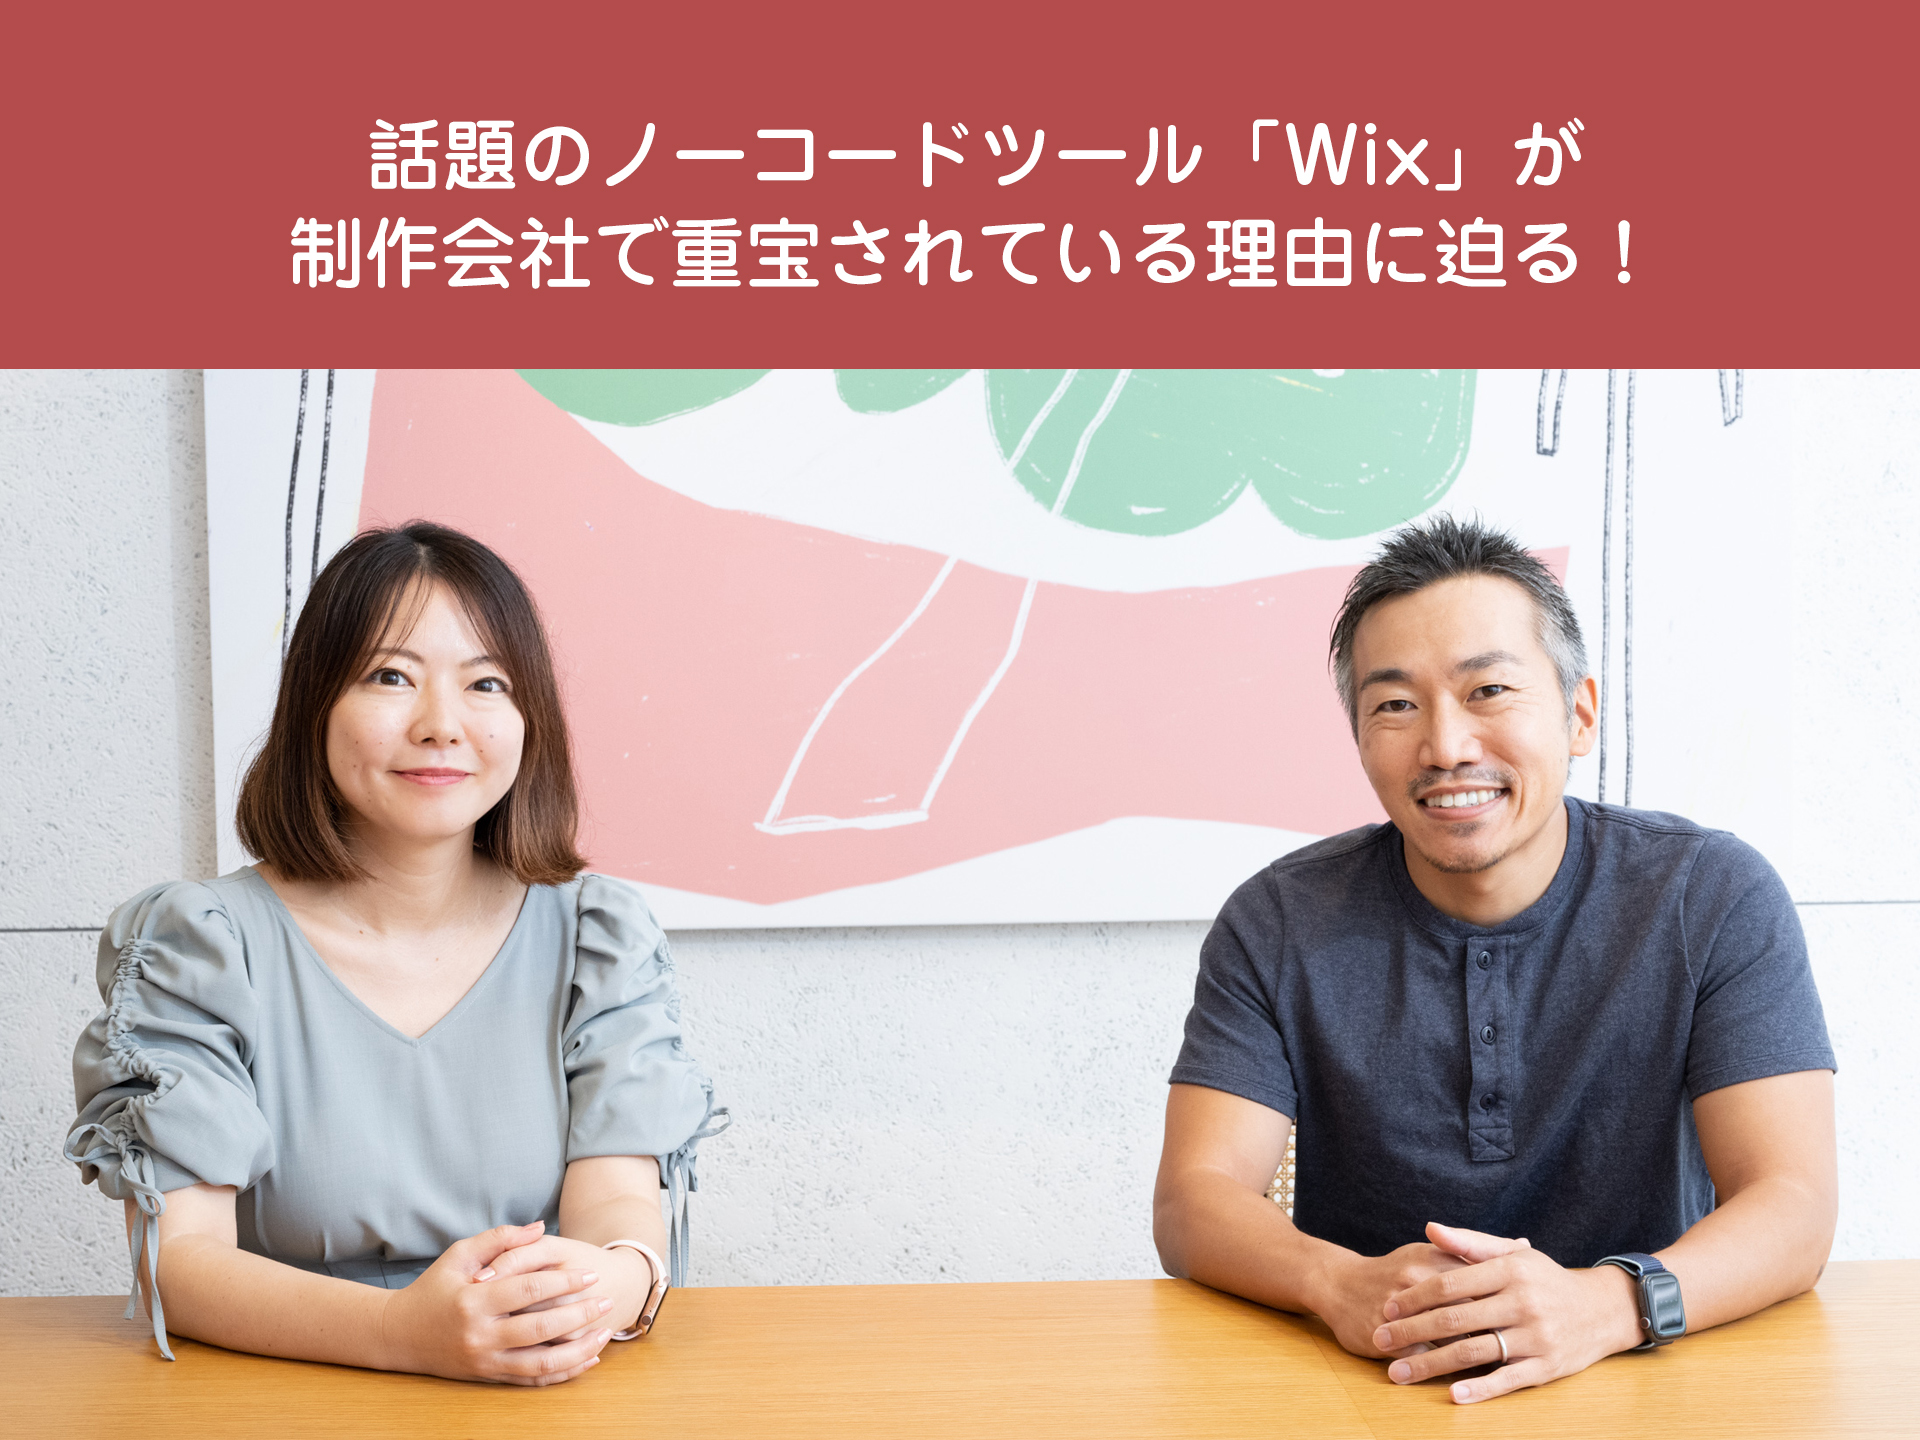 【PR】Webビジネスを成長させるプラットフォーム「Wix」が日本の制作者とともに目指すもの（前編）